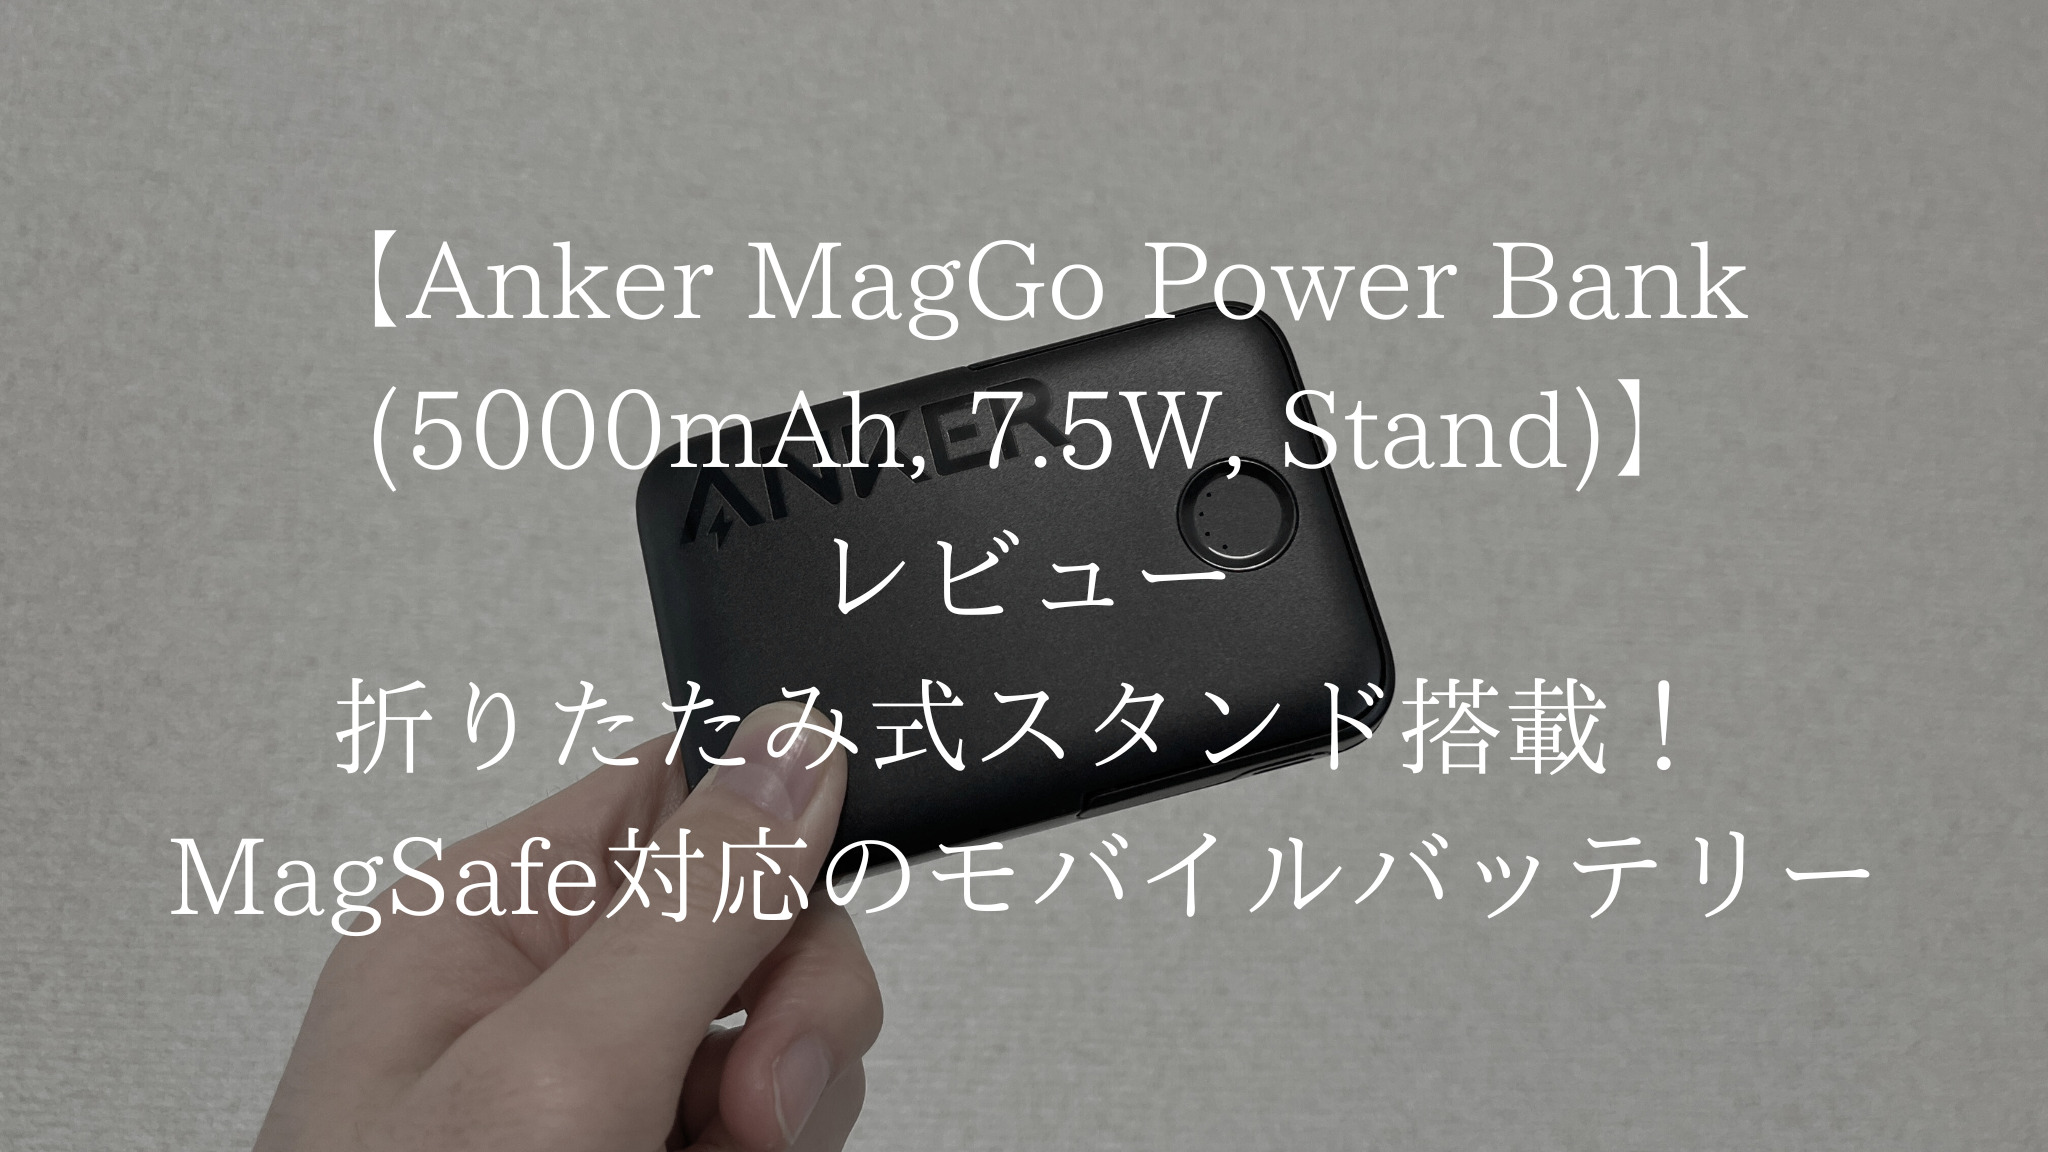 Anker MagGo Power Bank (5000mAh, 7.5W, Stand)のアイキャッチ画像